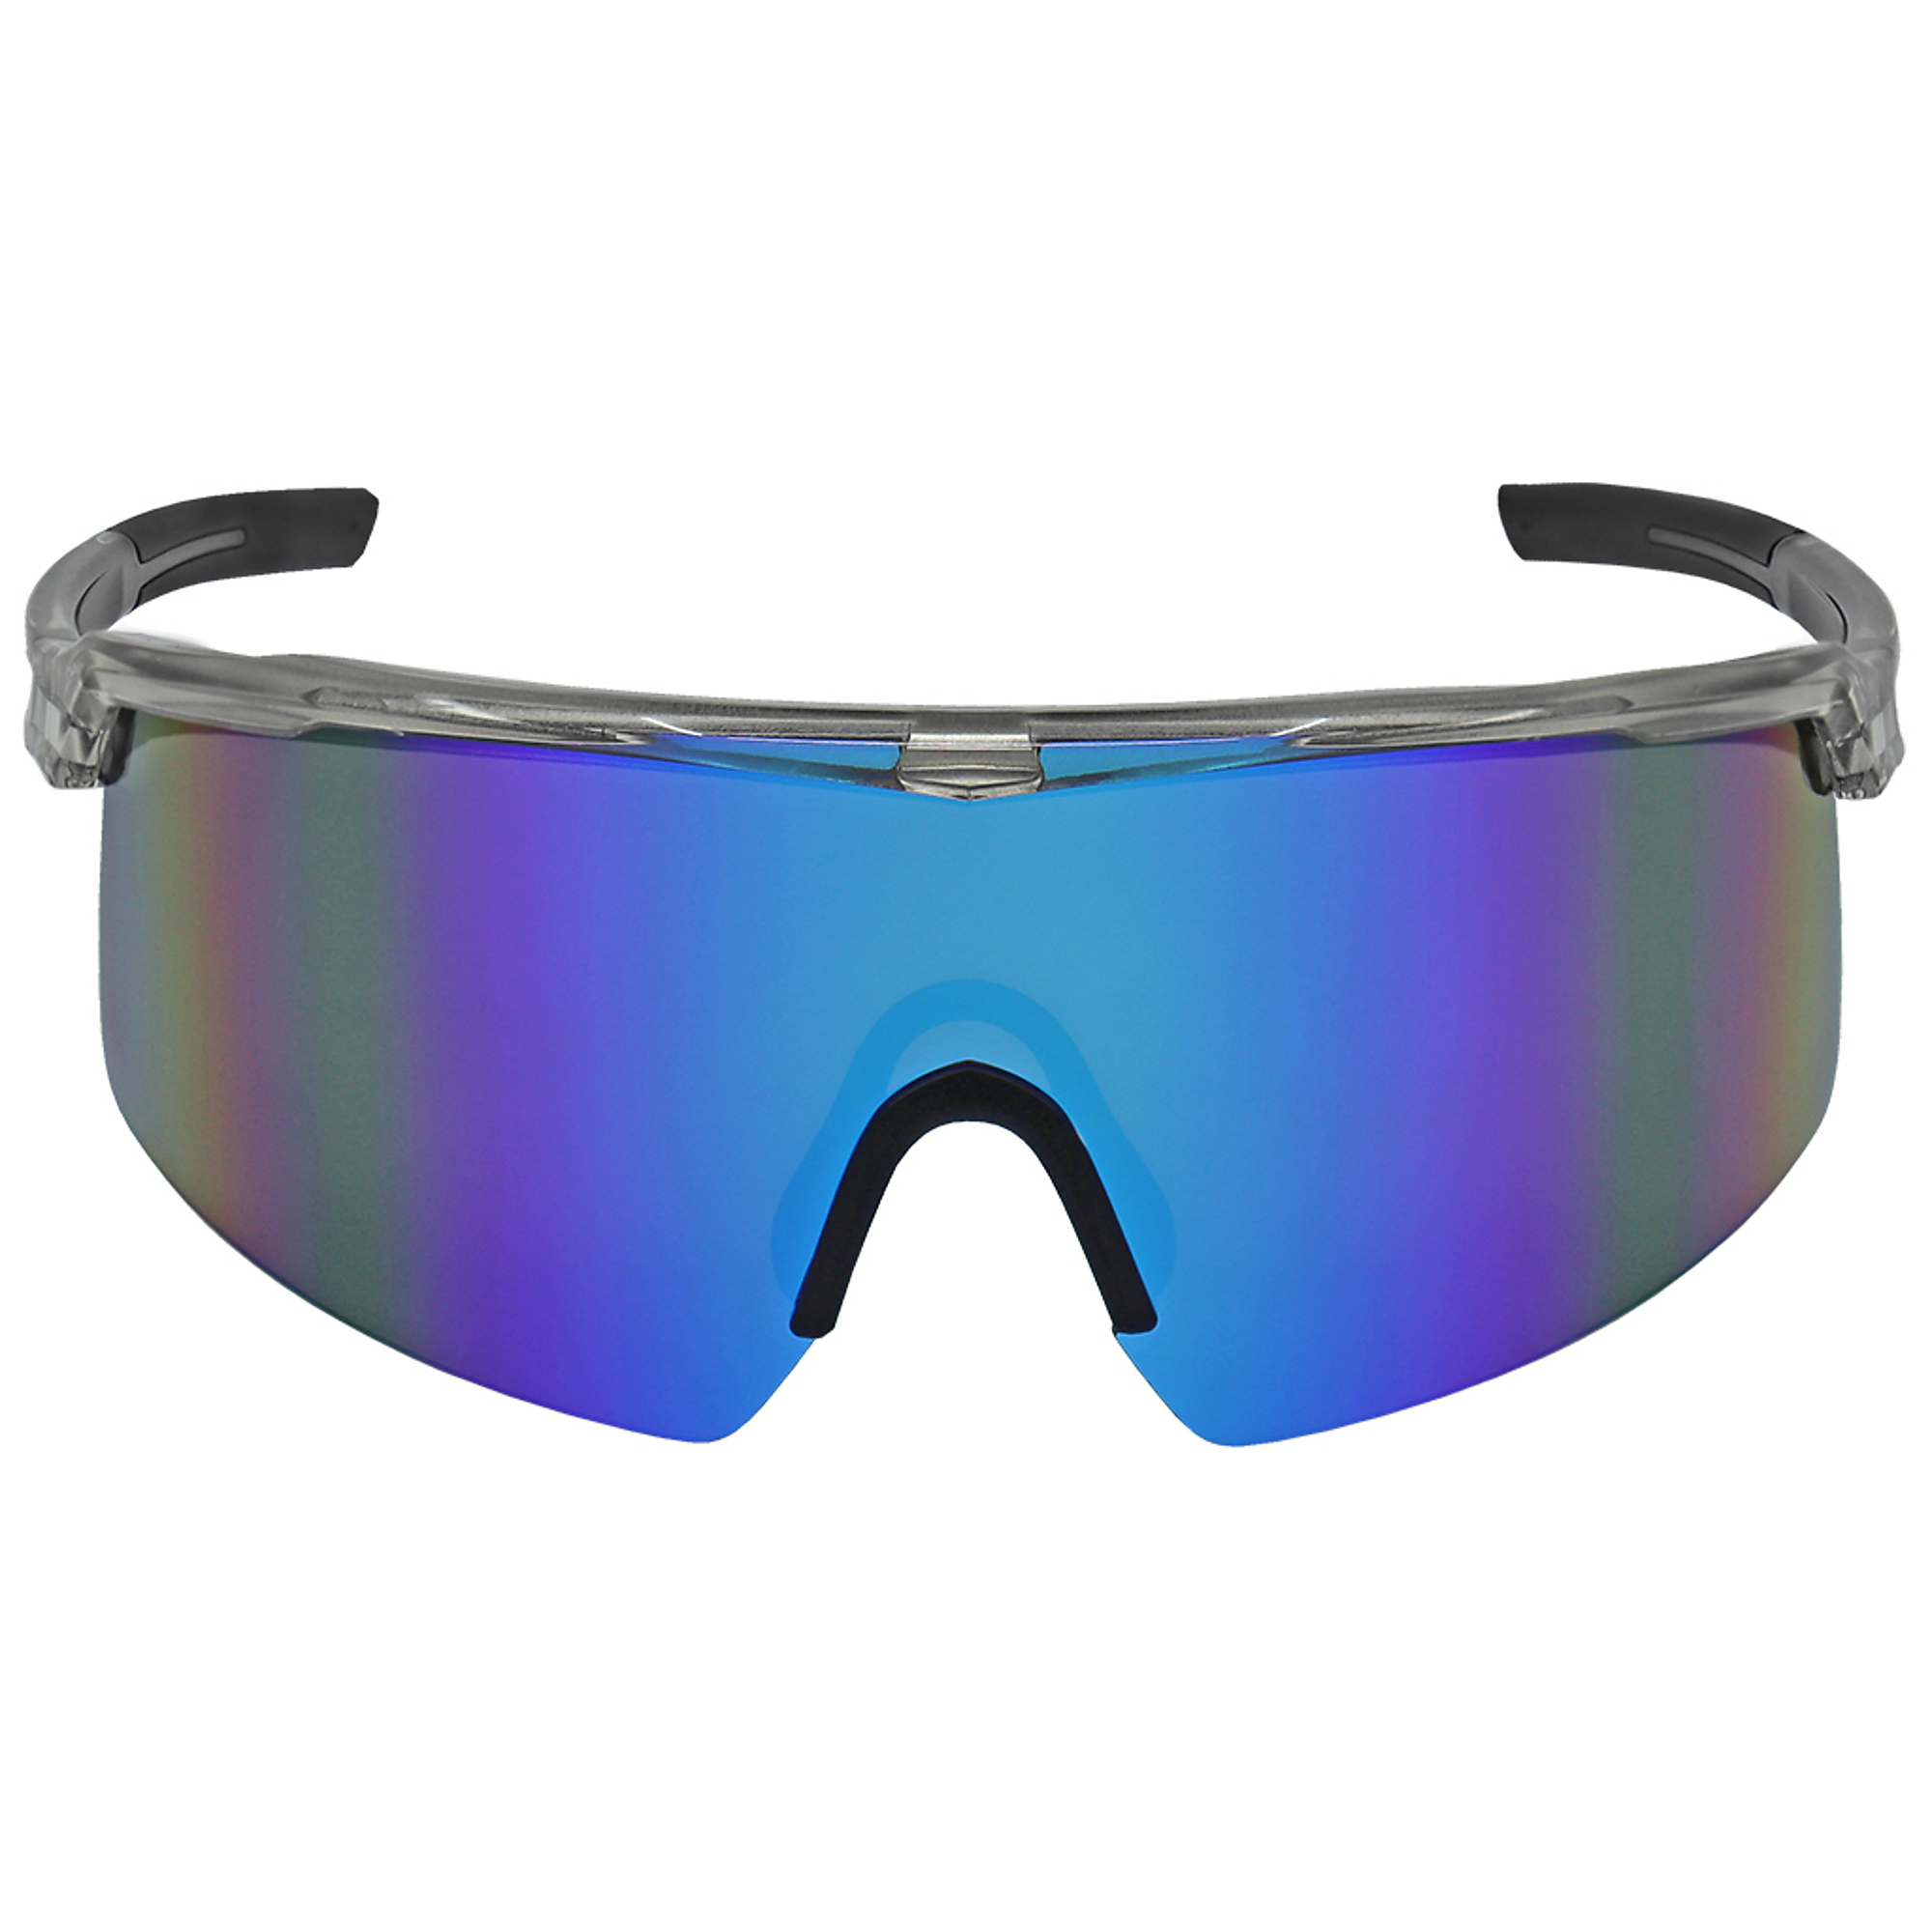 Bullhead BH3219PFT Whipray Safety Glasses - Silver Inlay Frame - Polarized Blue Mirror PFT Anti-Fog Lens